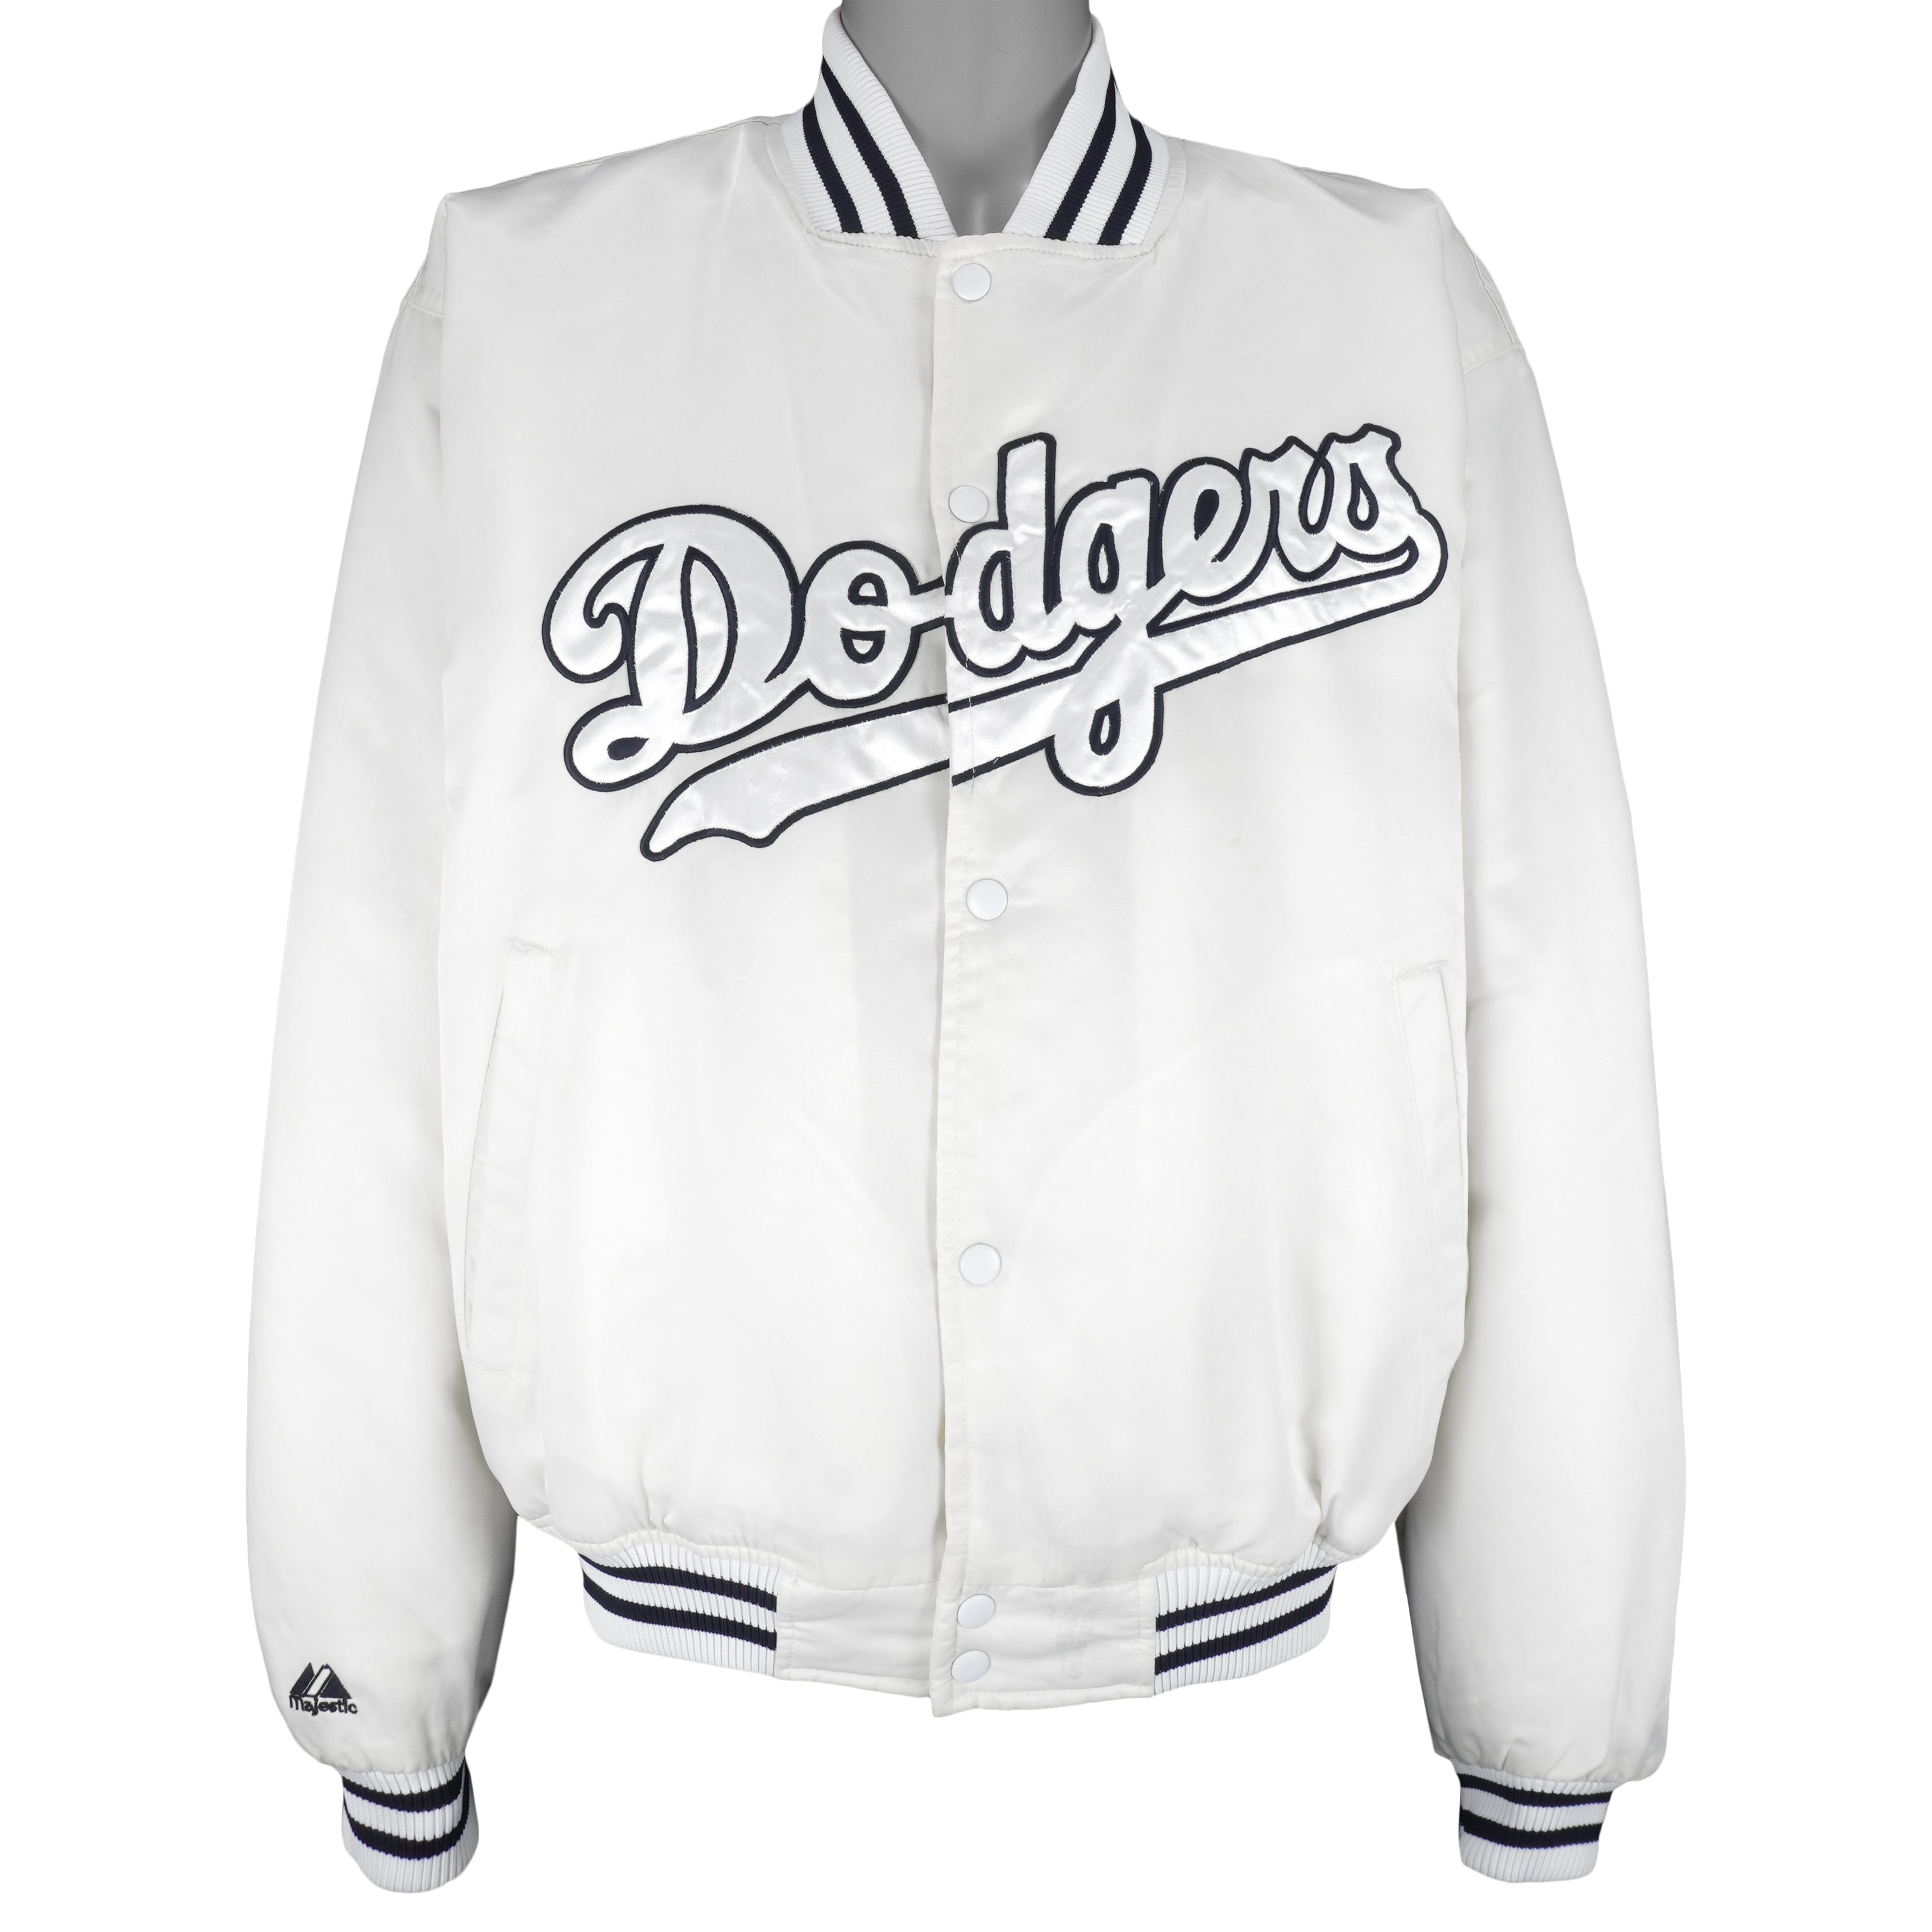 MLB (Majestic) - LA Dodgers Embroidered Satin Jacket 1990s Large